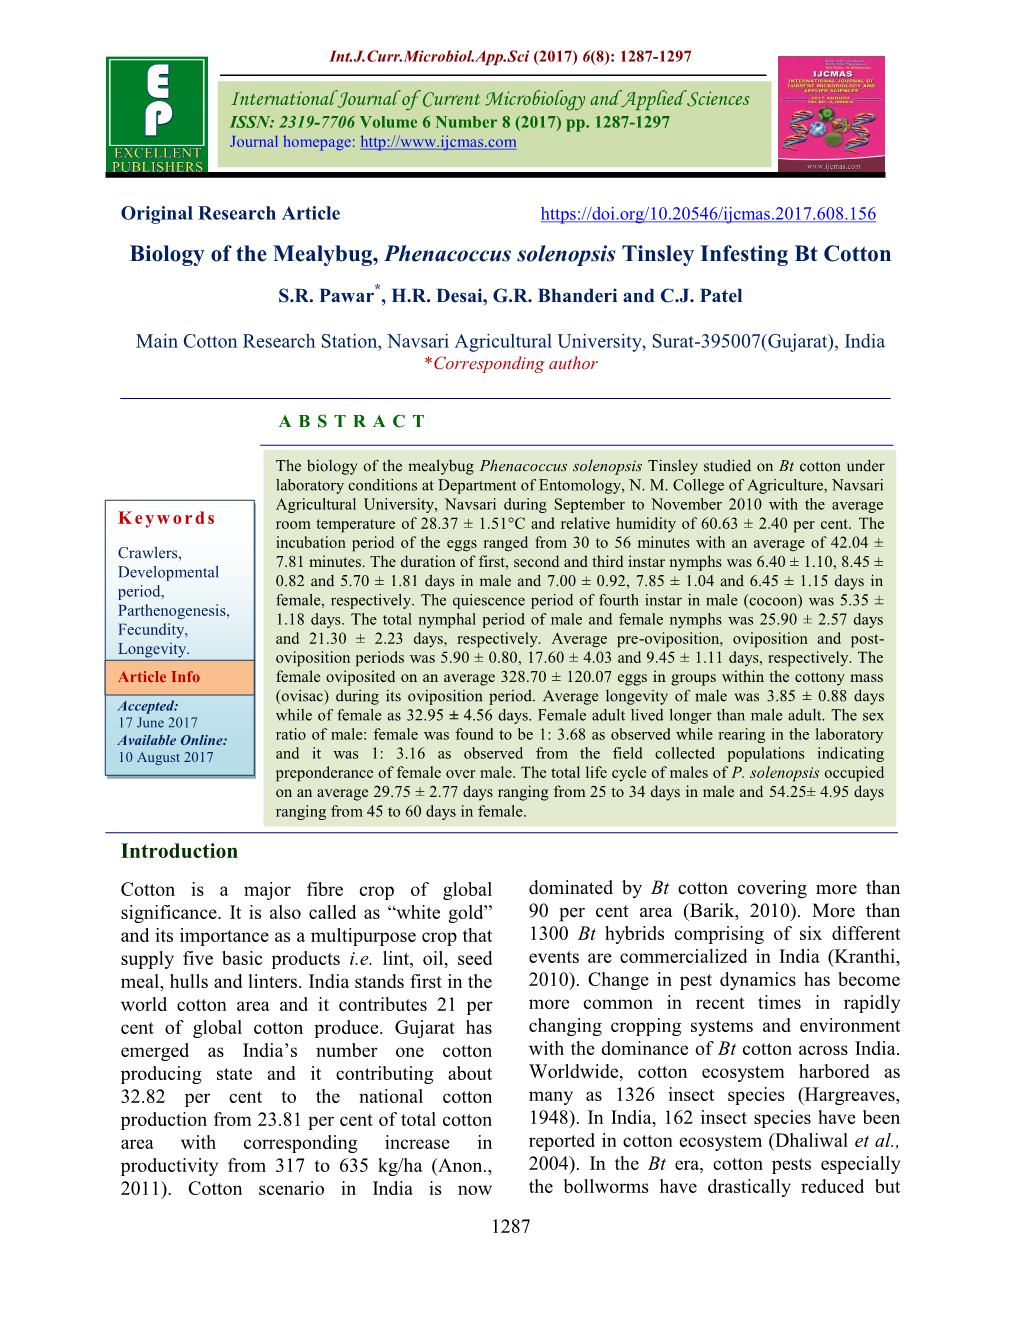 Biology of the Mealybug, Phenacoccus Solenopsis Tinsley Infesting Bt Cotton